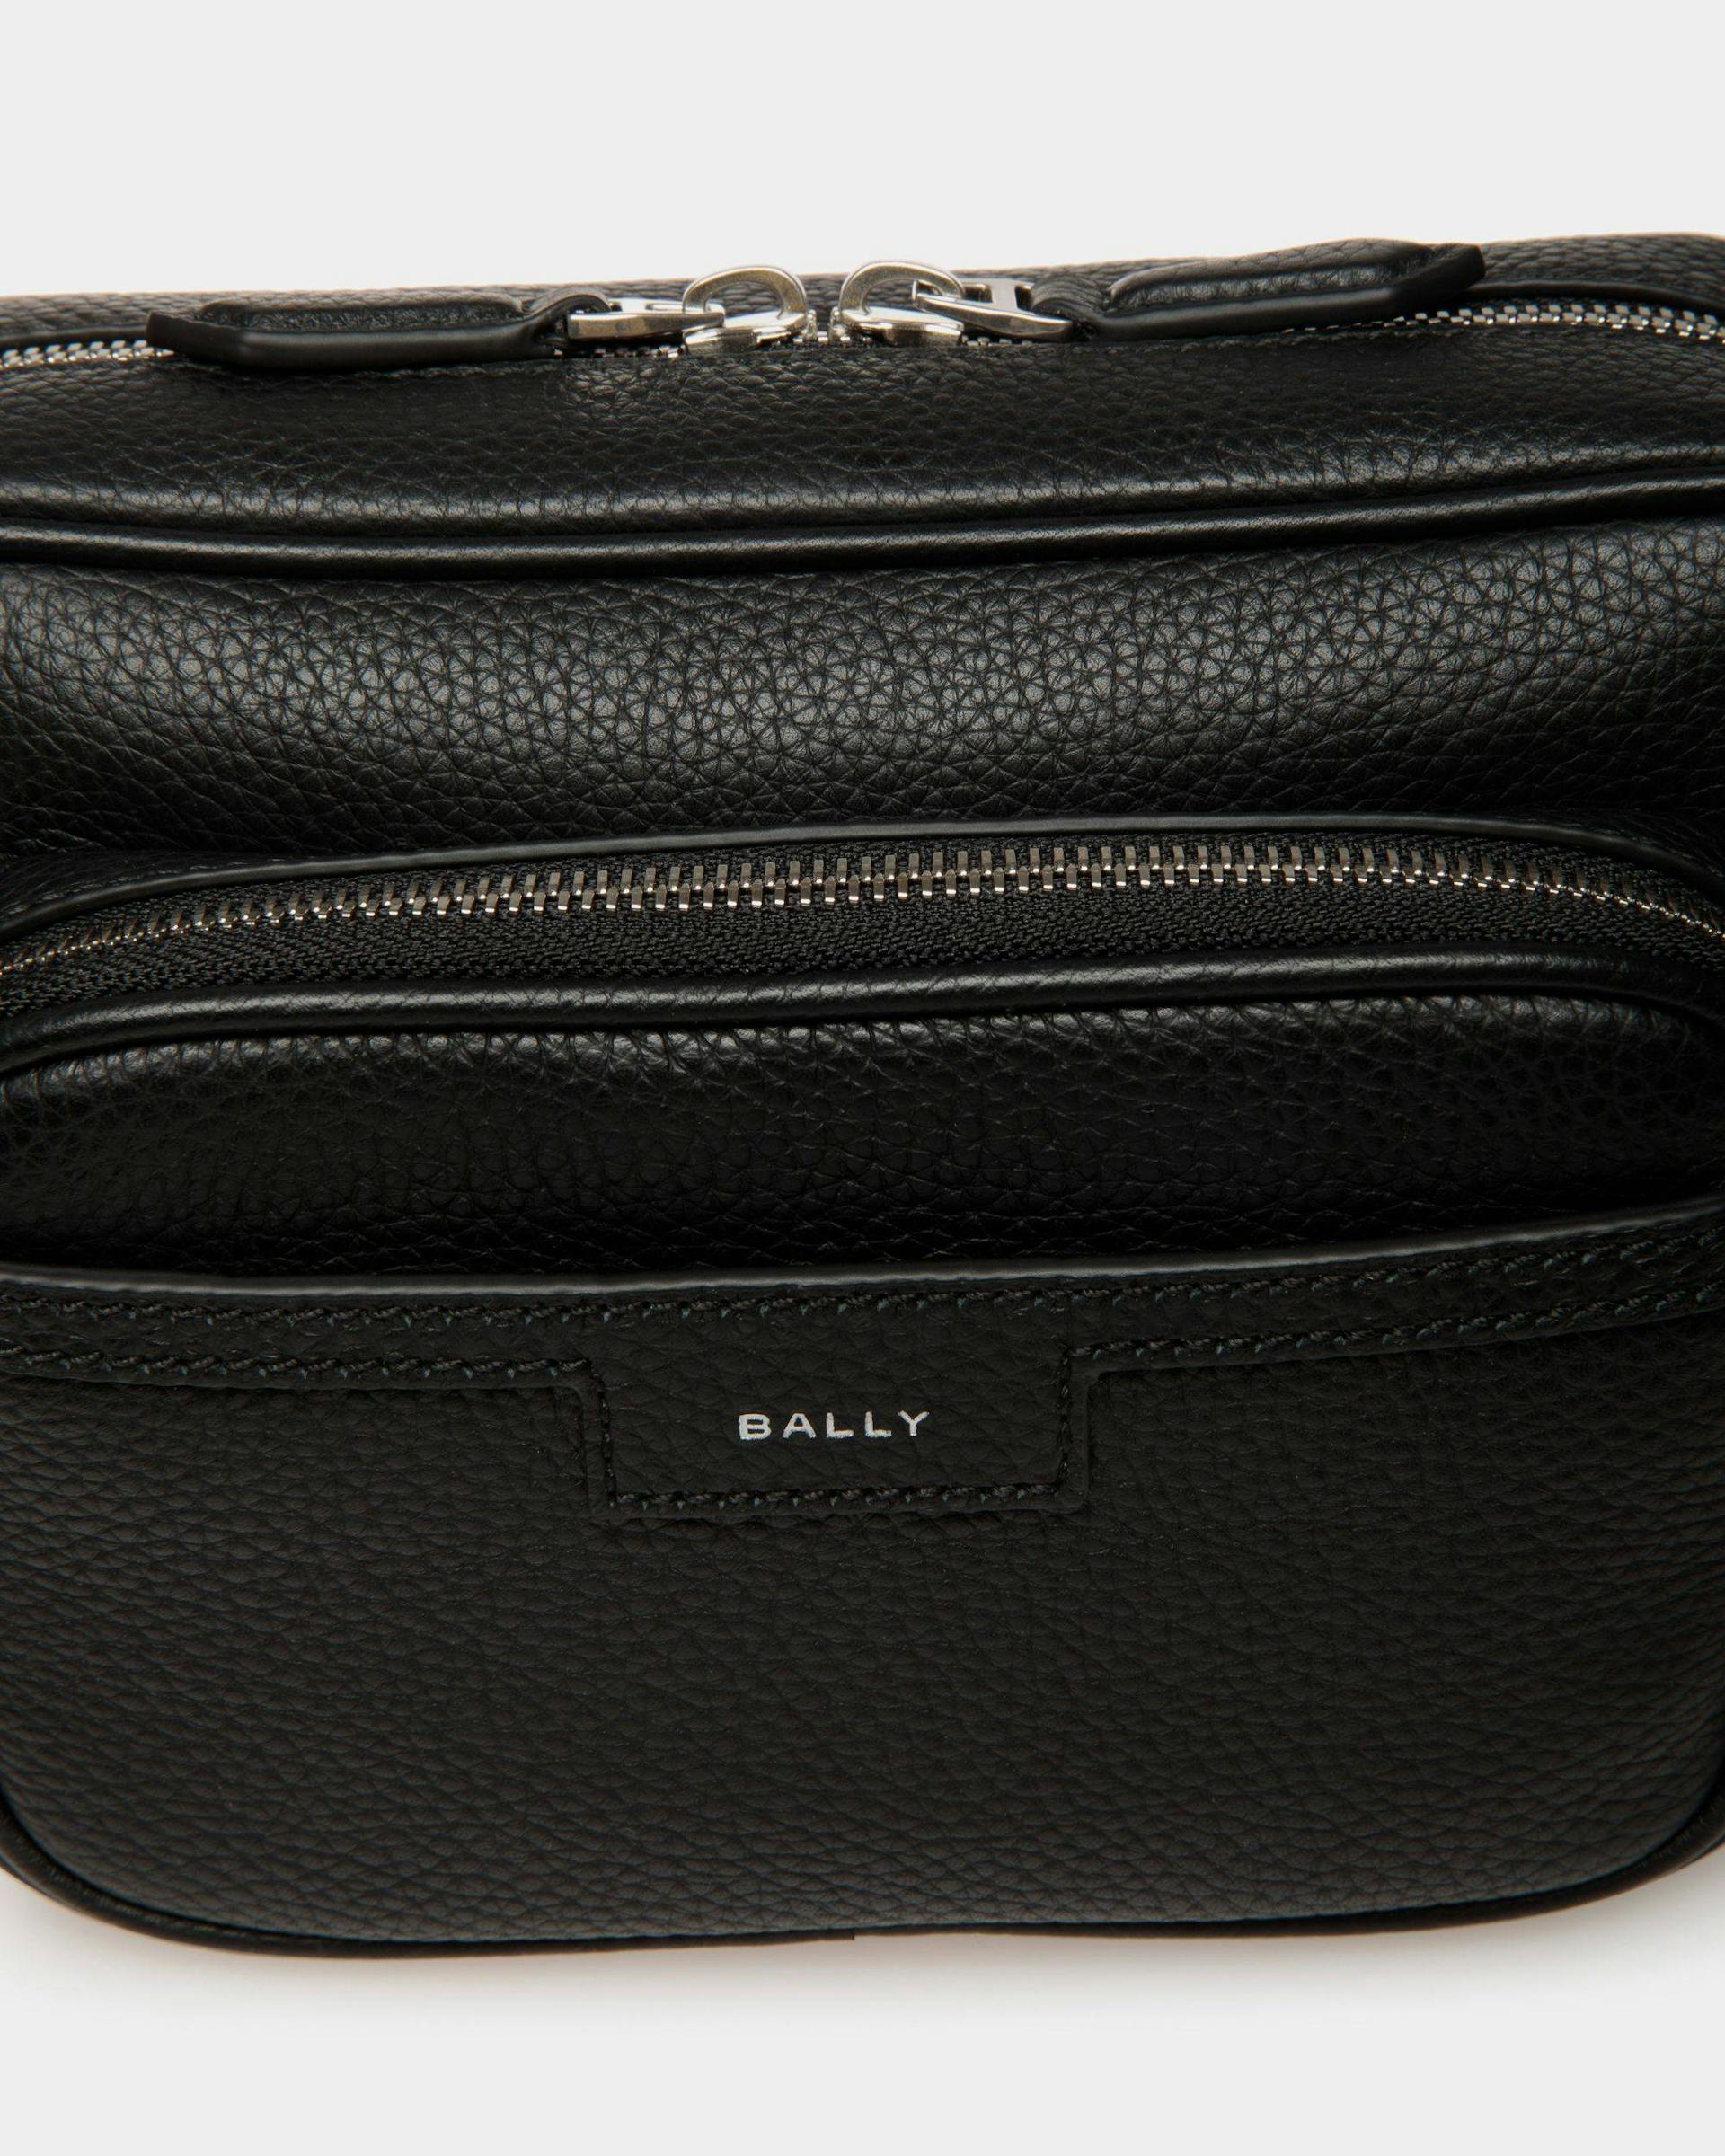 Men's Code Crossbody Bag in Black Grained Leather | Bally | Still Life Detail